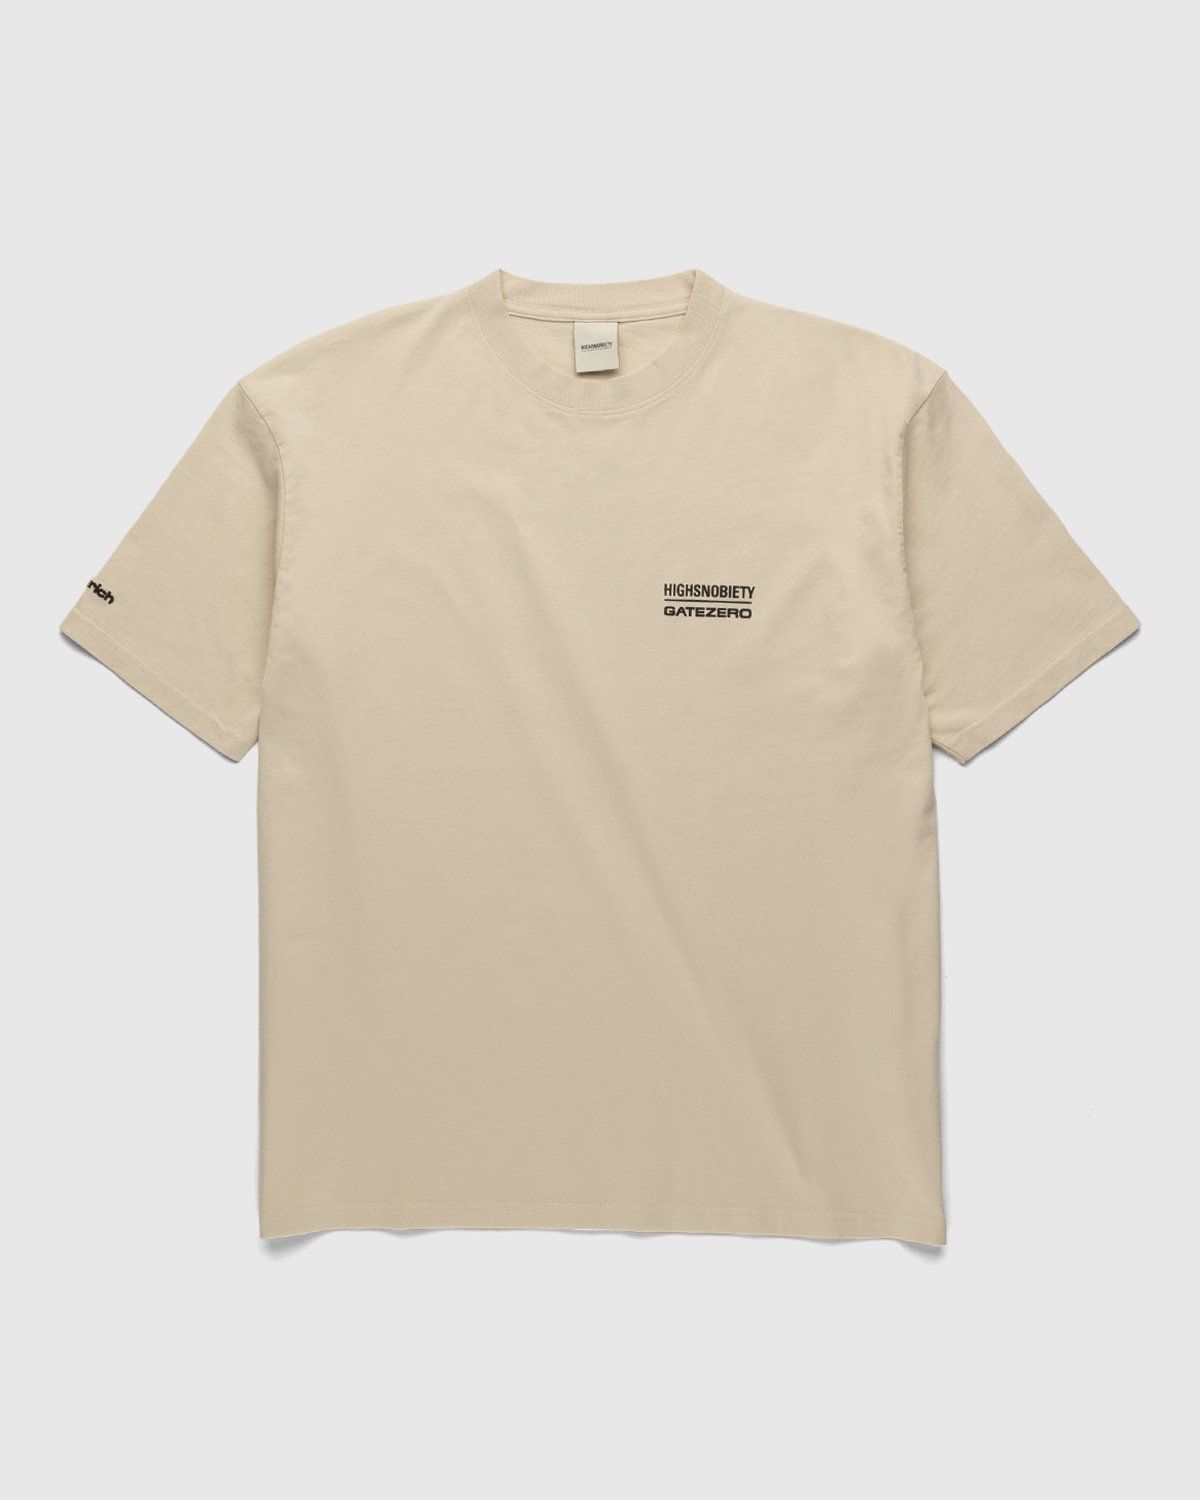 Highsnobiety – GATEZERO City Series 1 T-Shirt Eggshell - T-shirts - White - Image 2